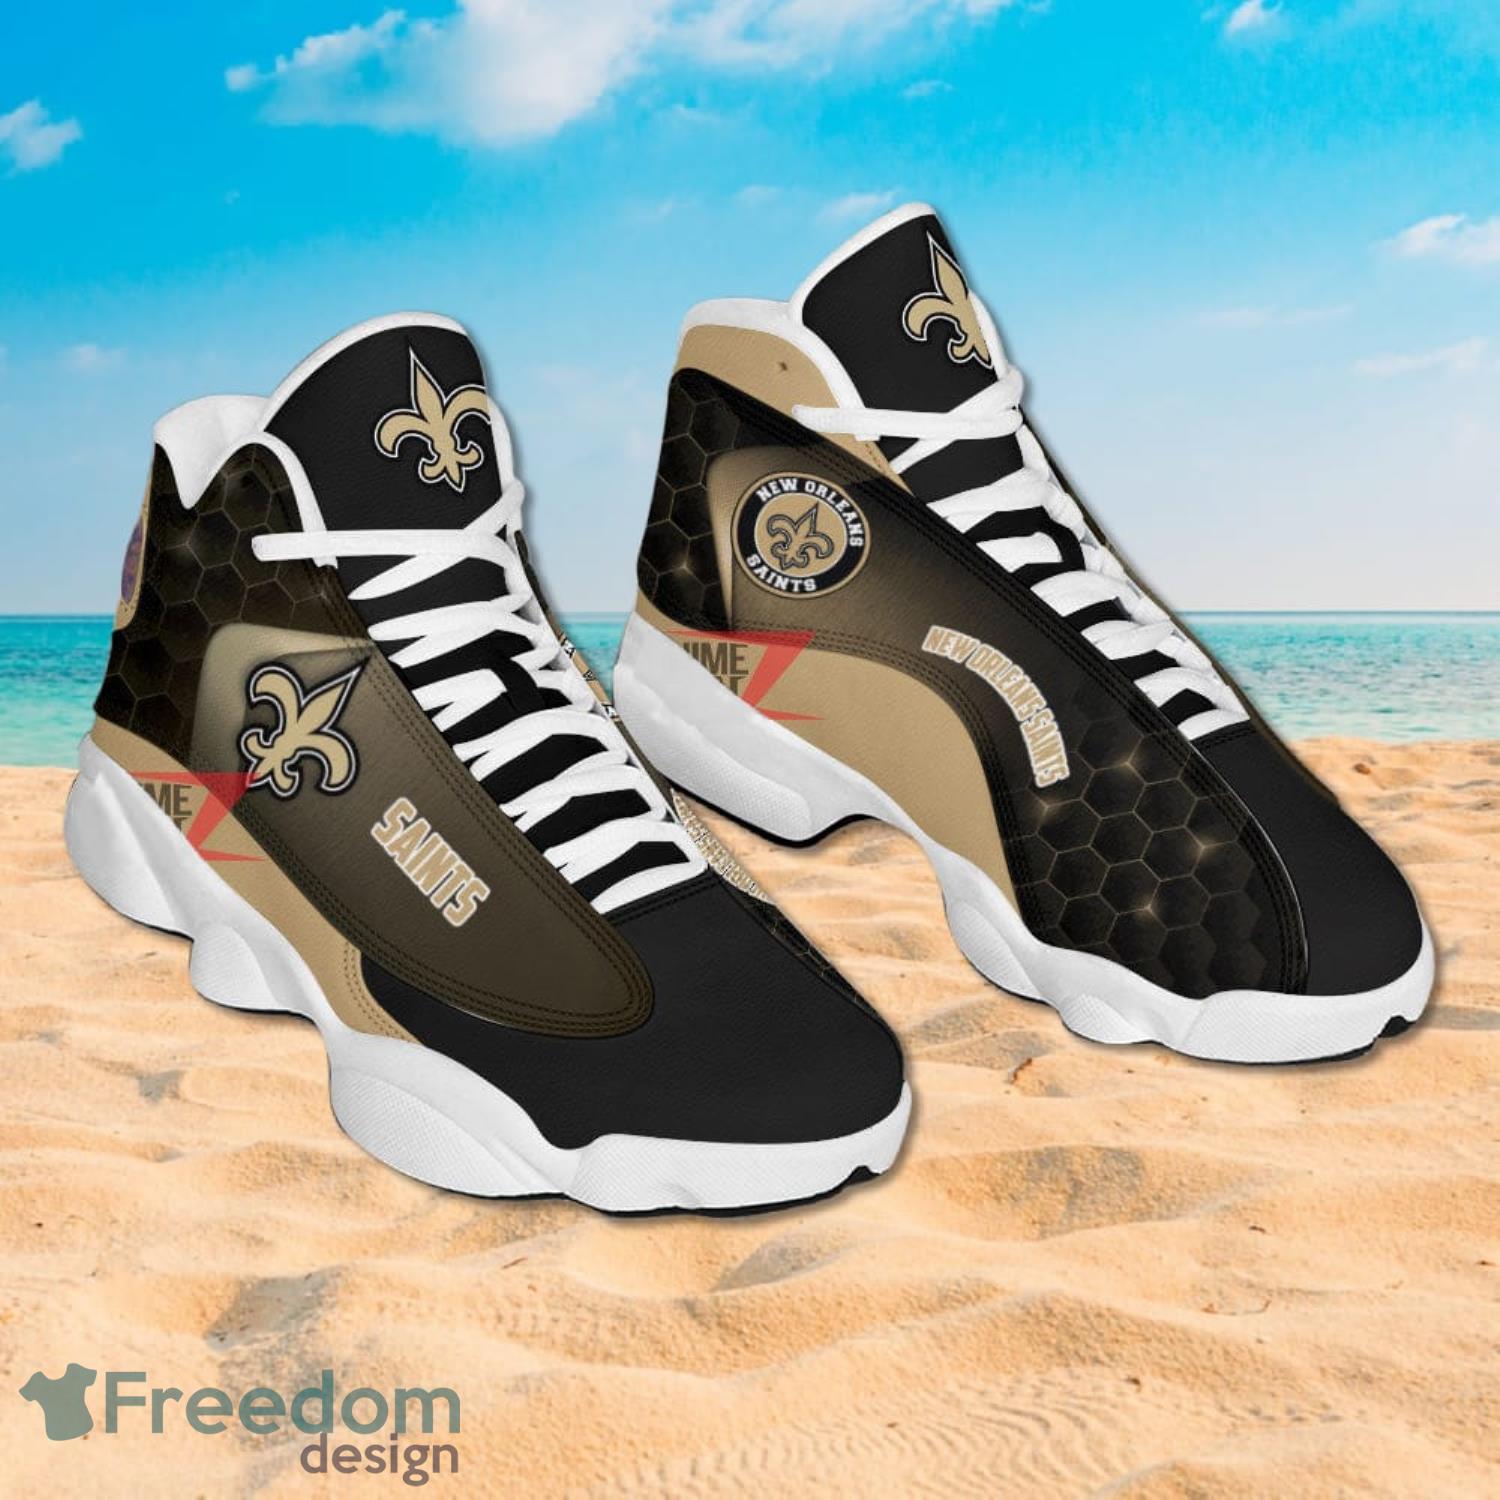 New Orleans Saints Limited Edition BLACK Air Jordan 13 Sneakers